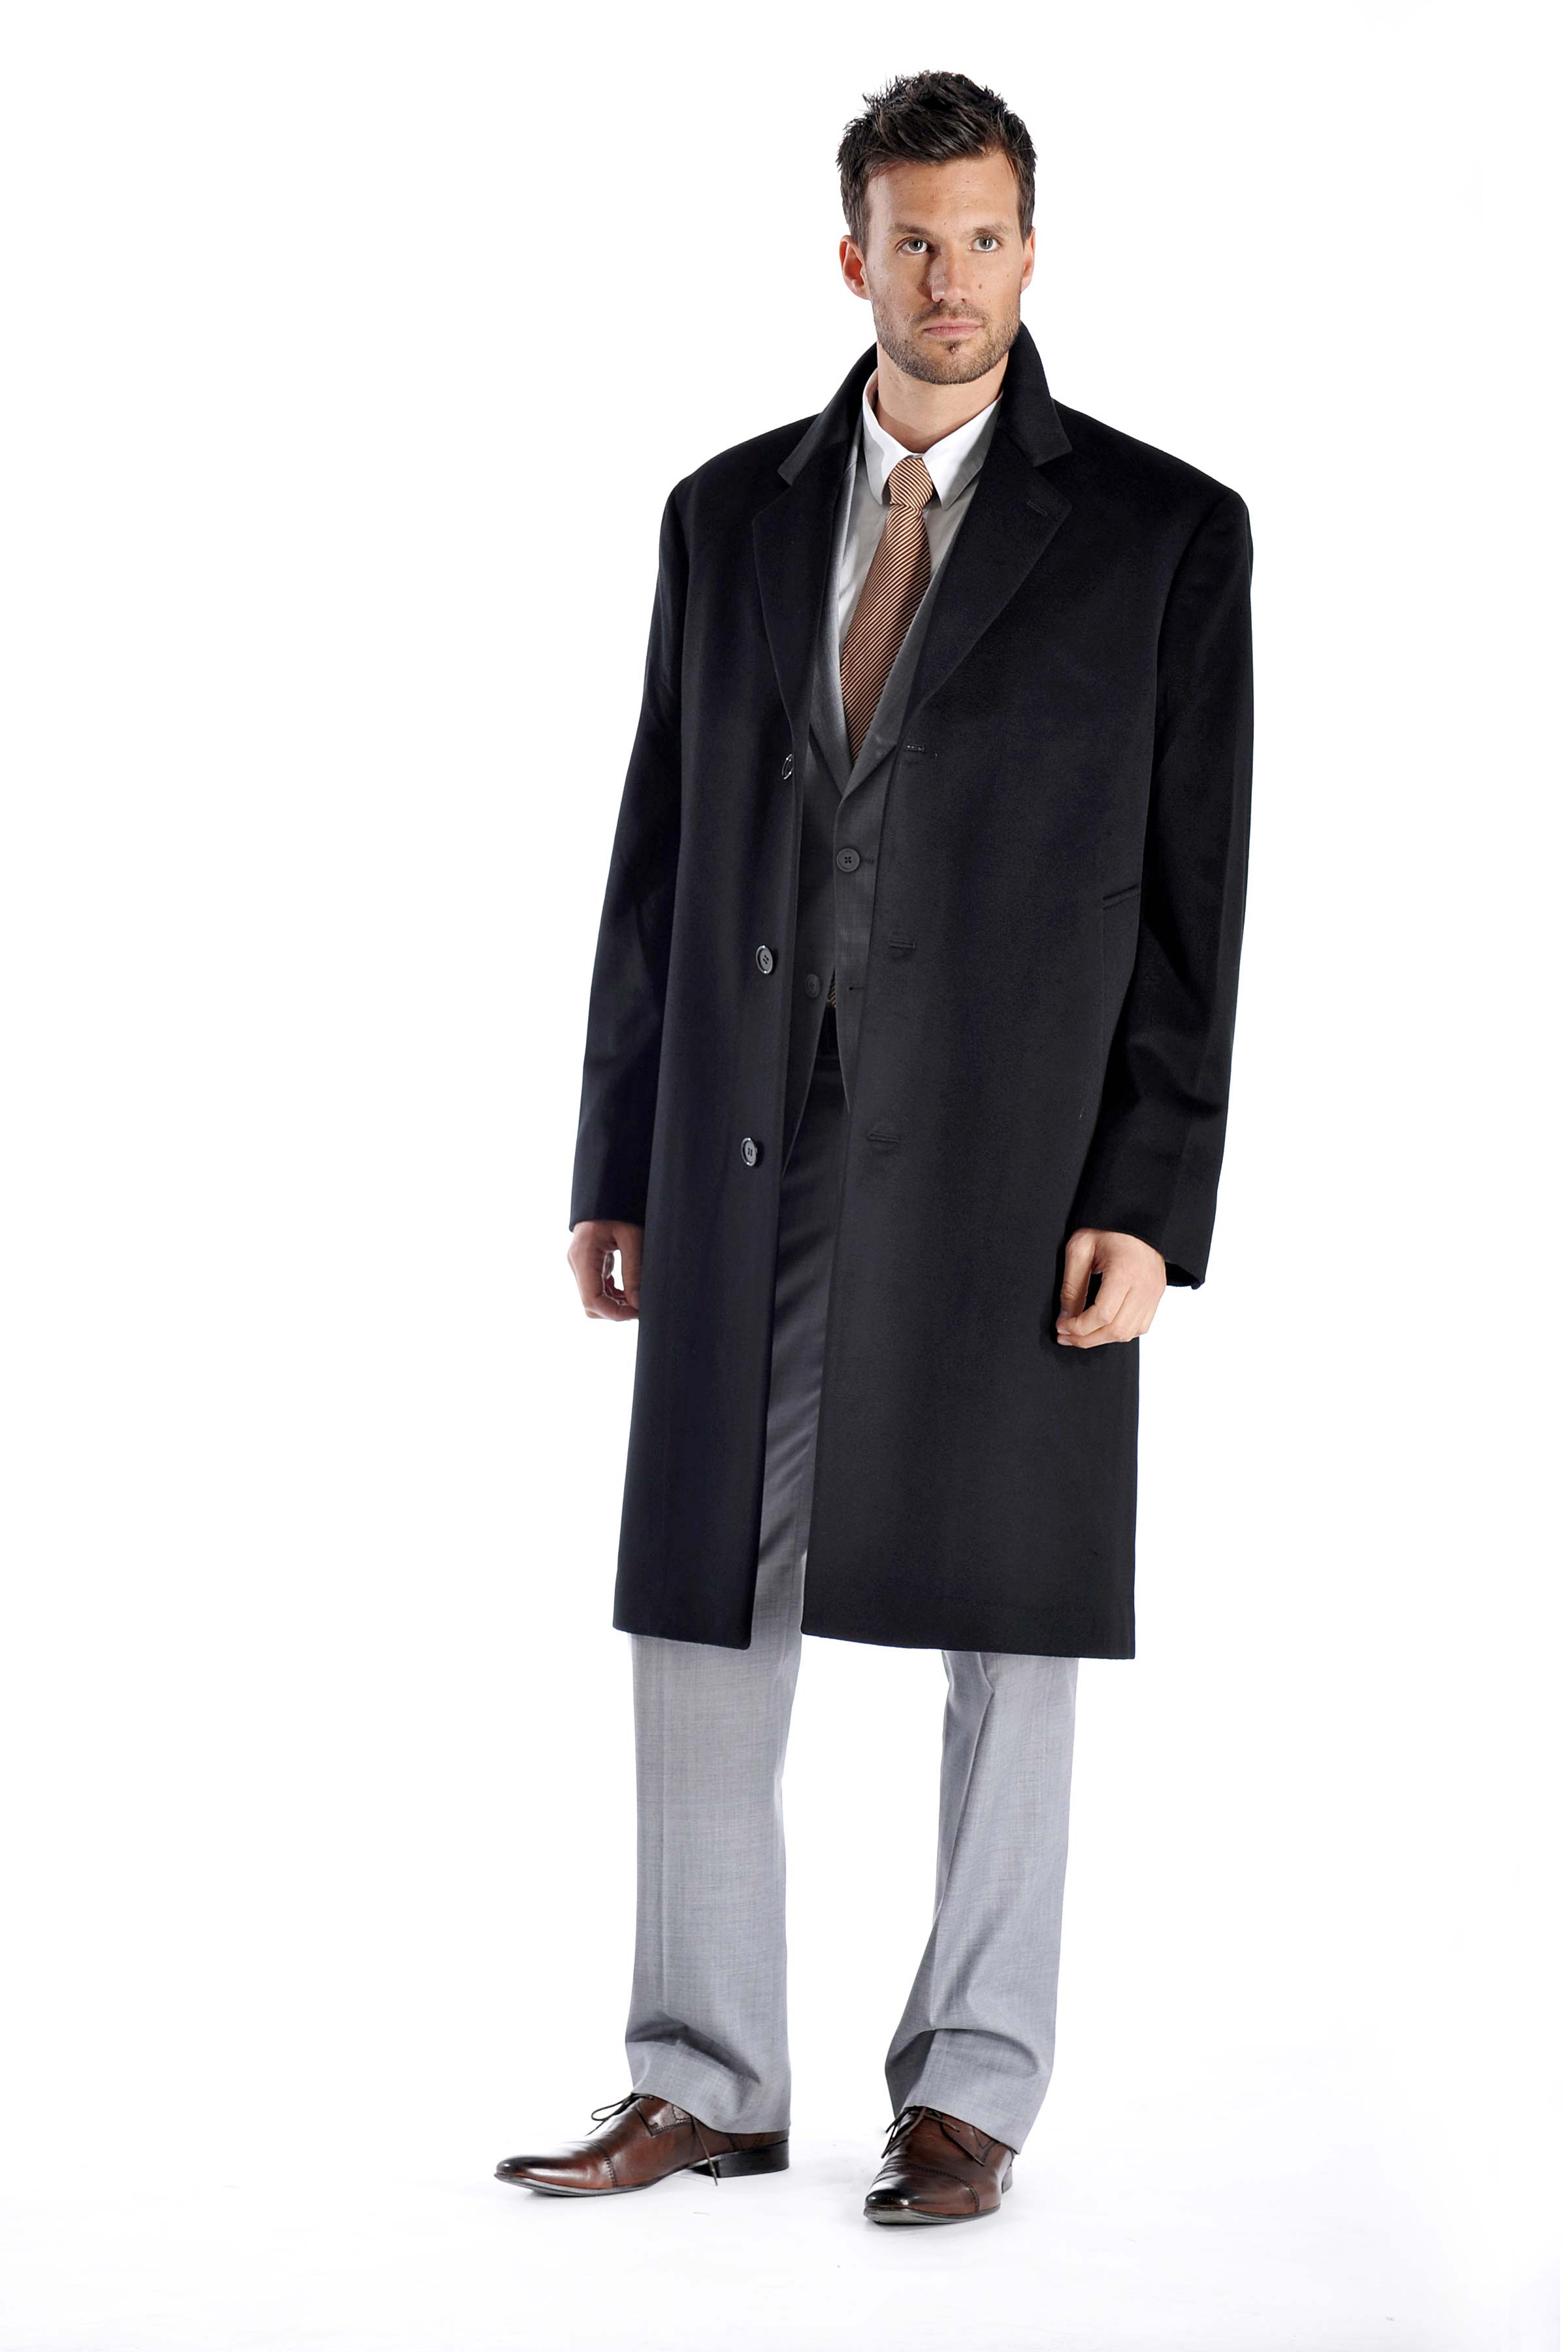 Pure Cashmere Knee Length Coat for Men (Black, 44)